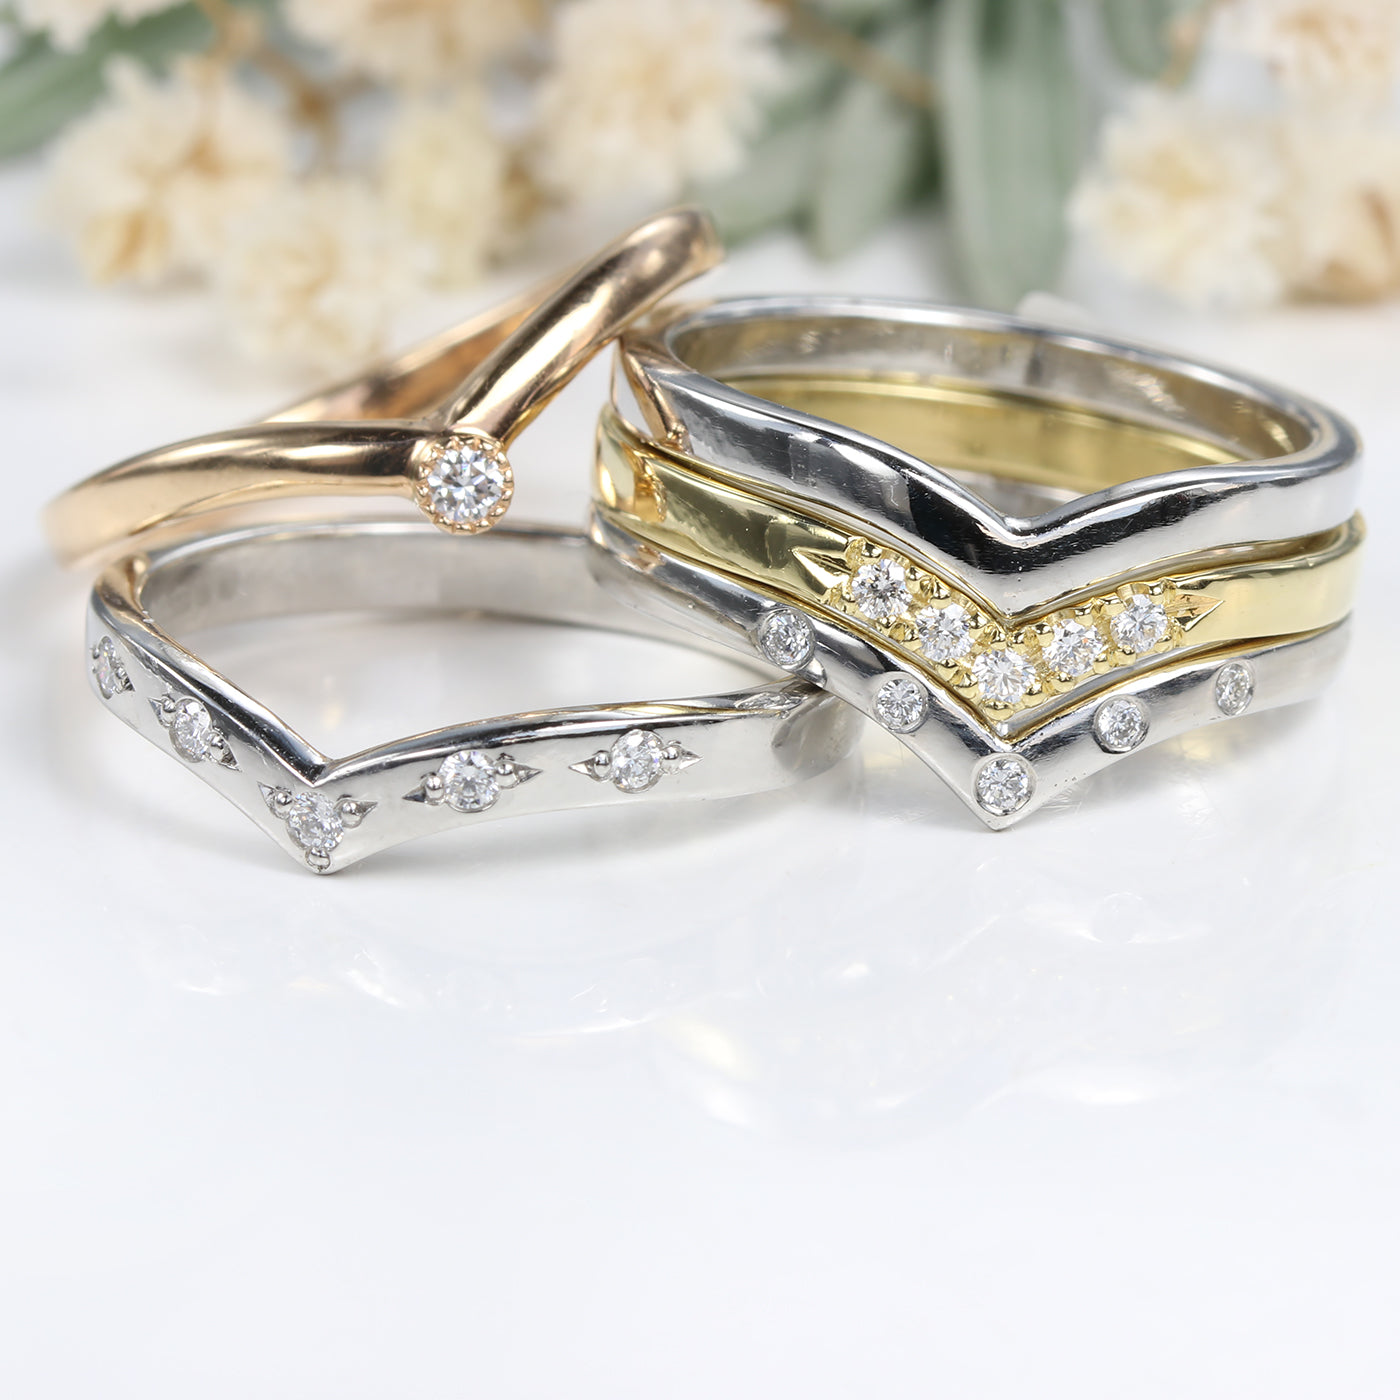 18ct Gold Pavé Diamond Wishbone Wedding or Eternity Ring - Size M